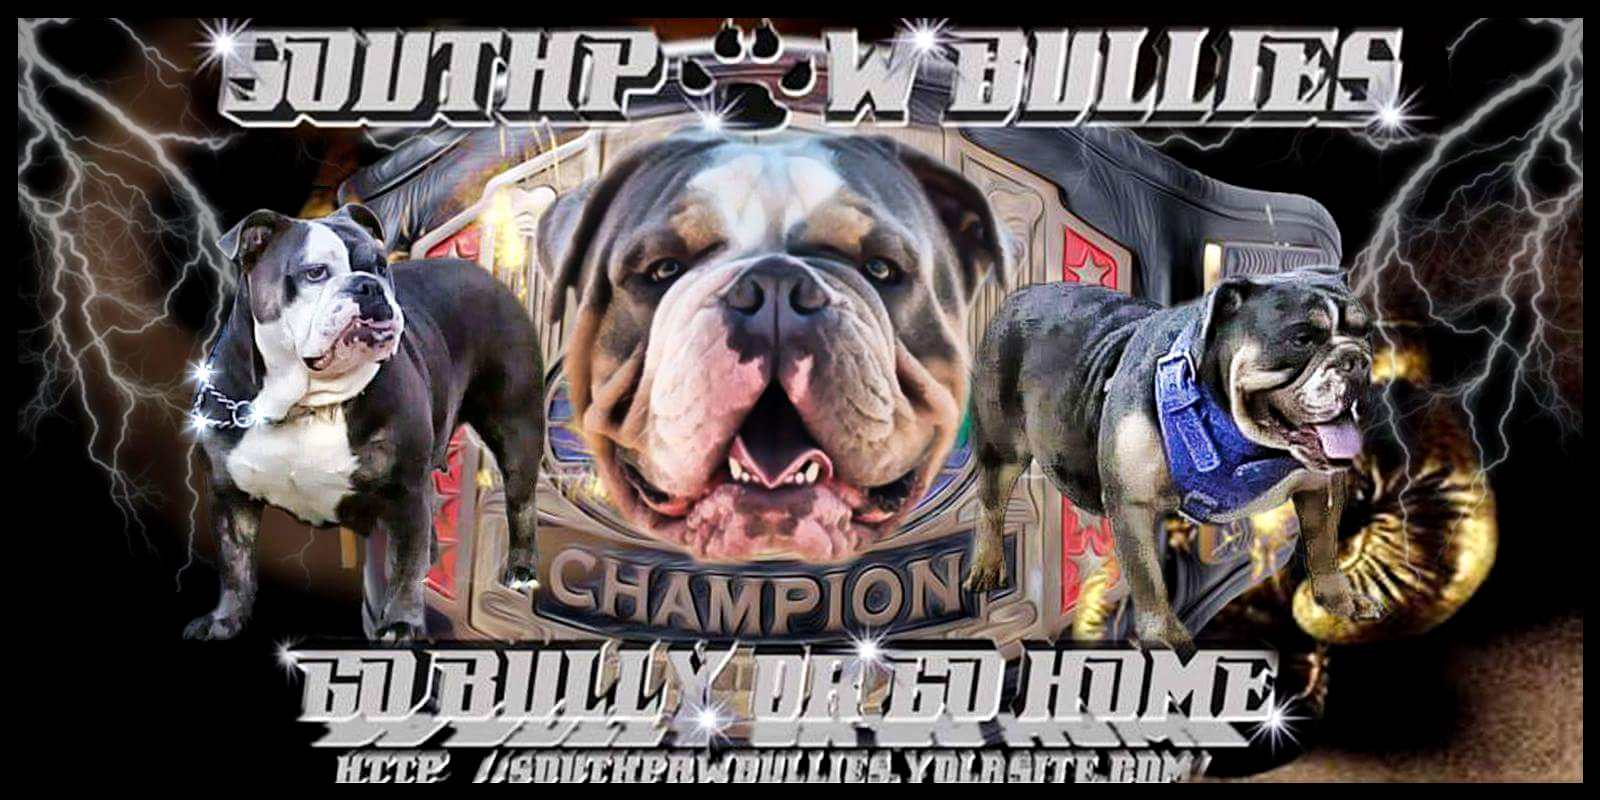 SouthPaw Bullies; Home of the Buffdog & English Bulldog